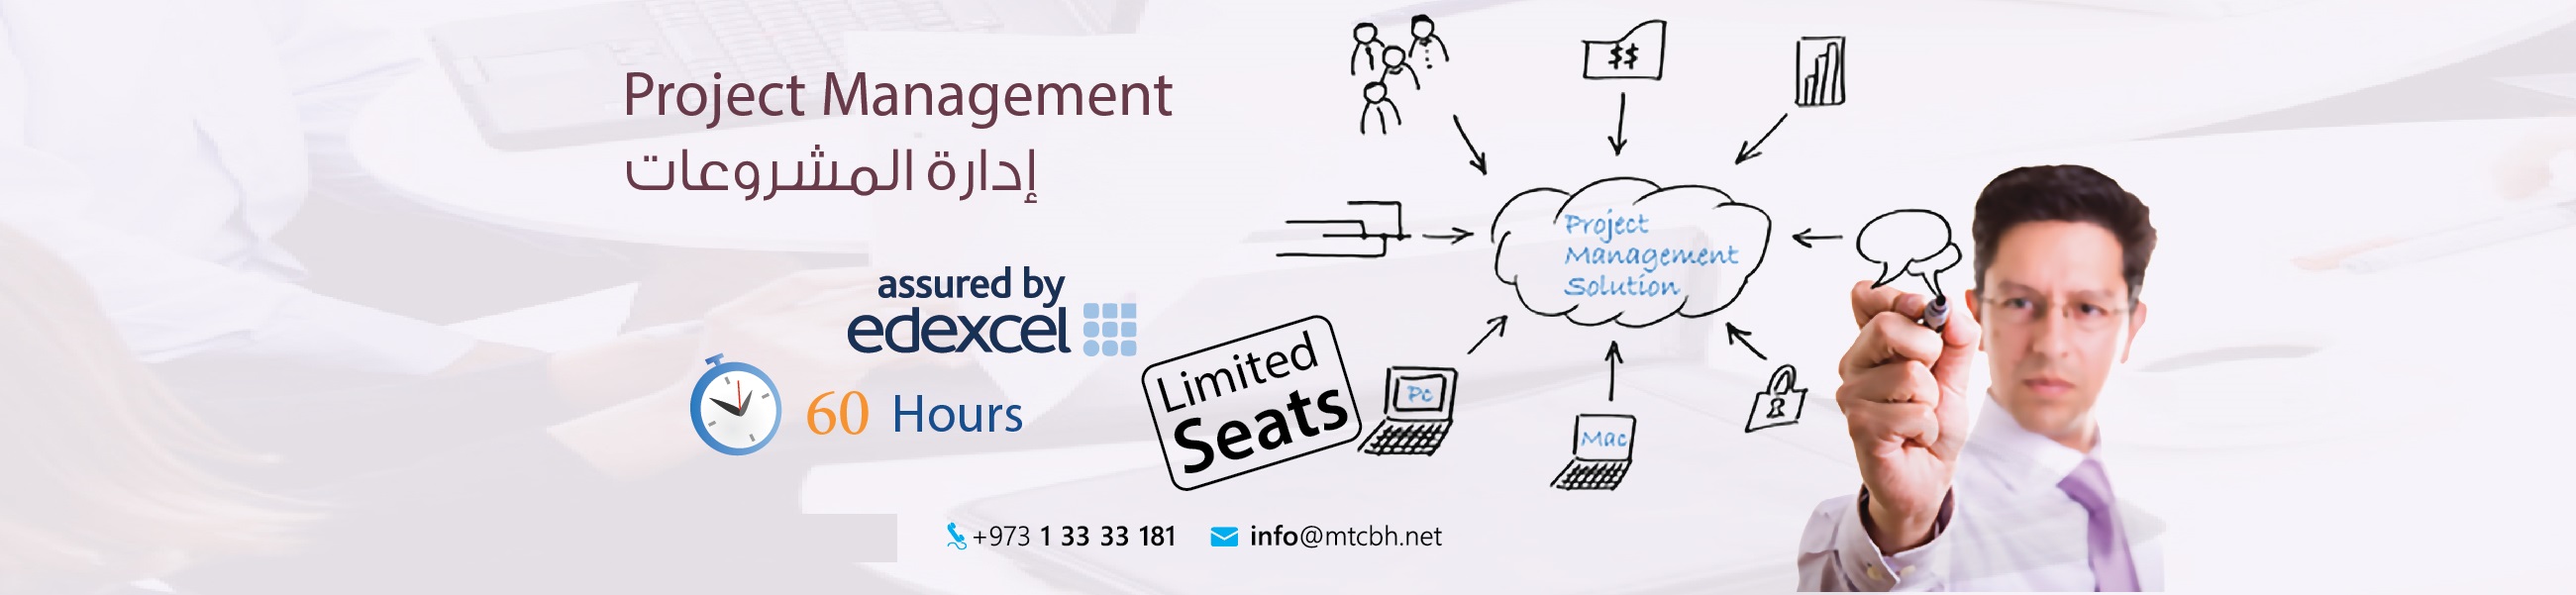 Website - Project Management -01.jpg